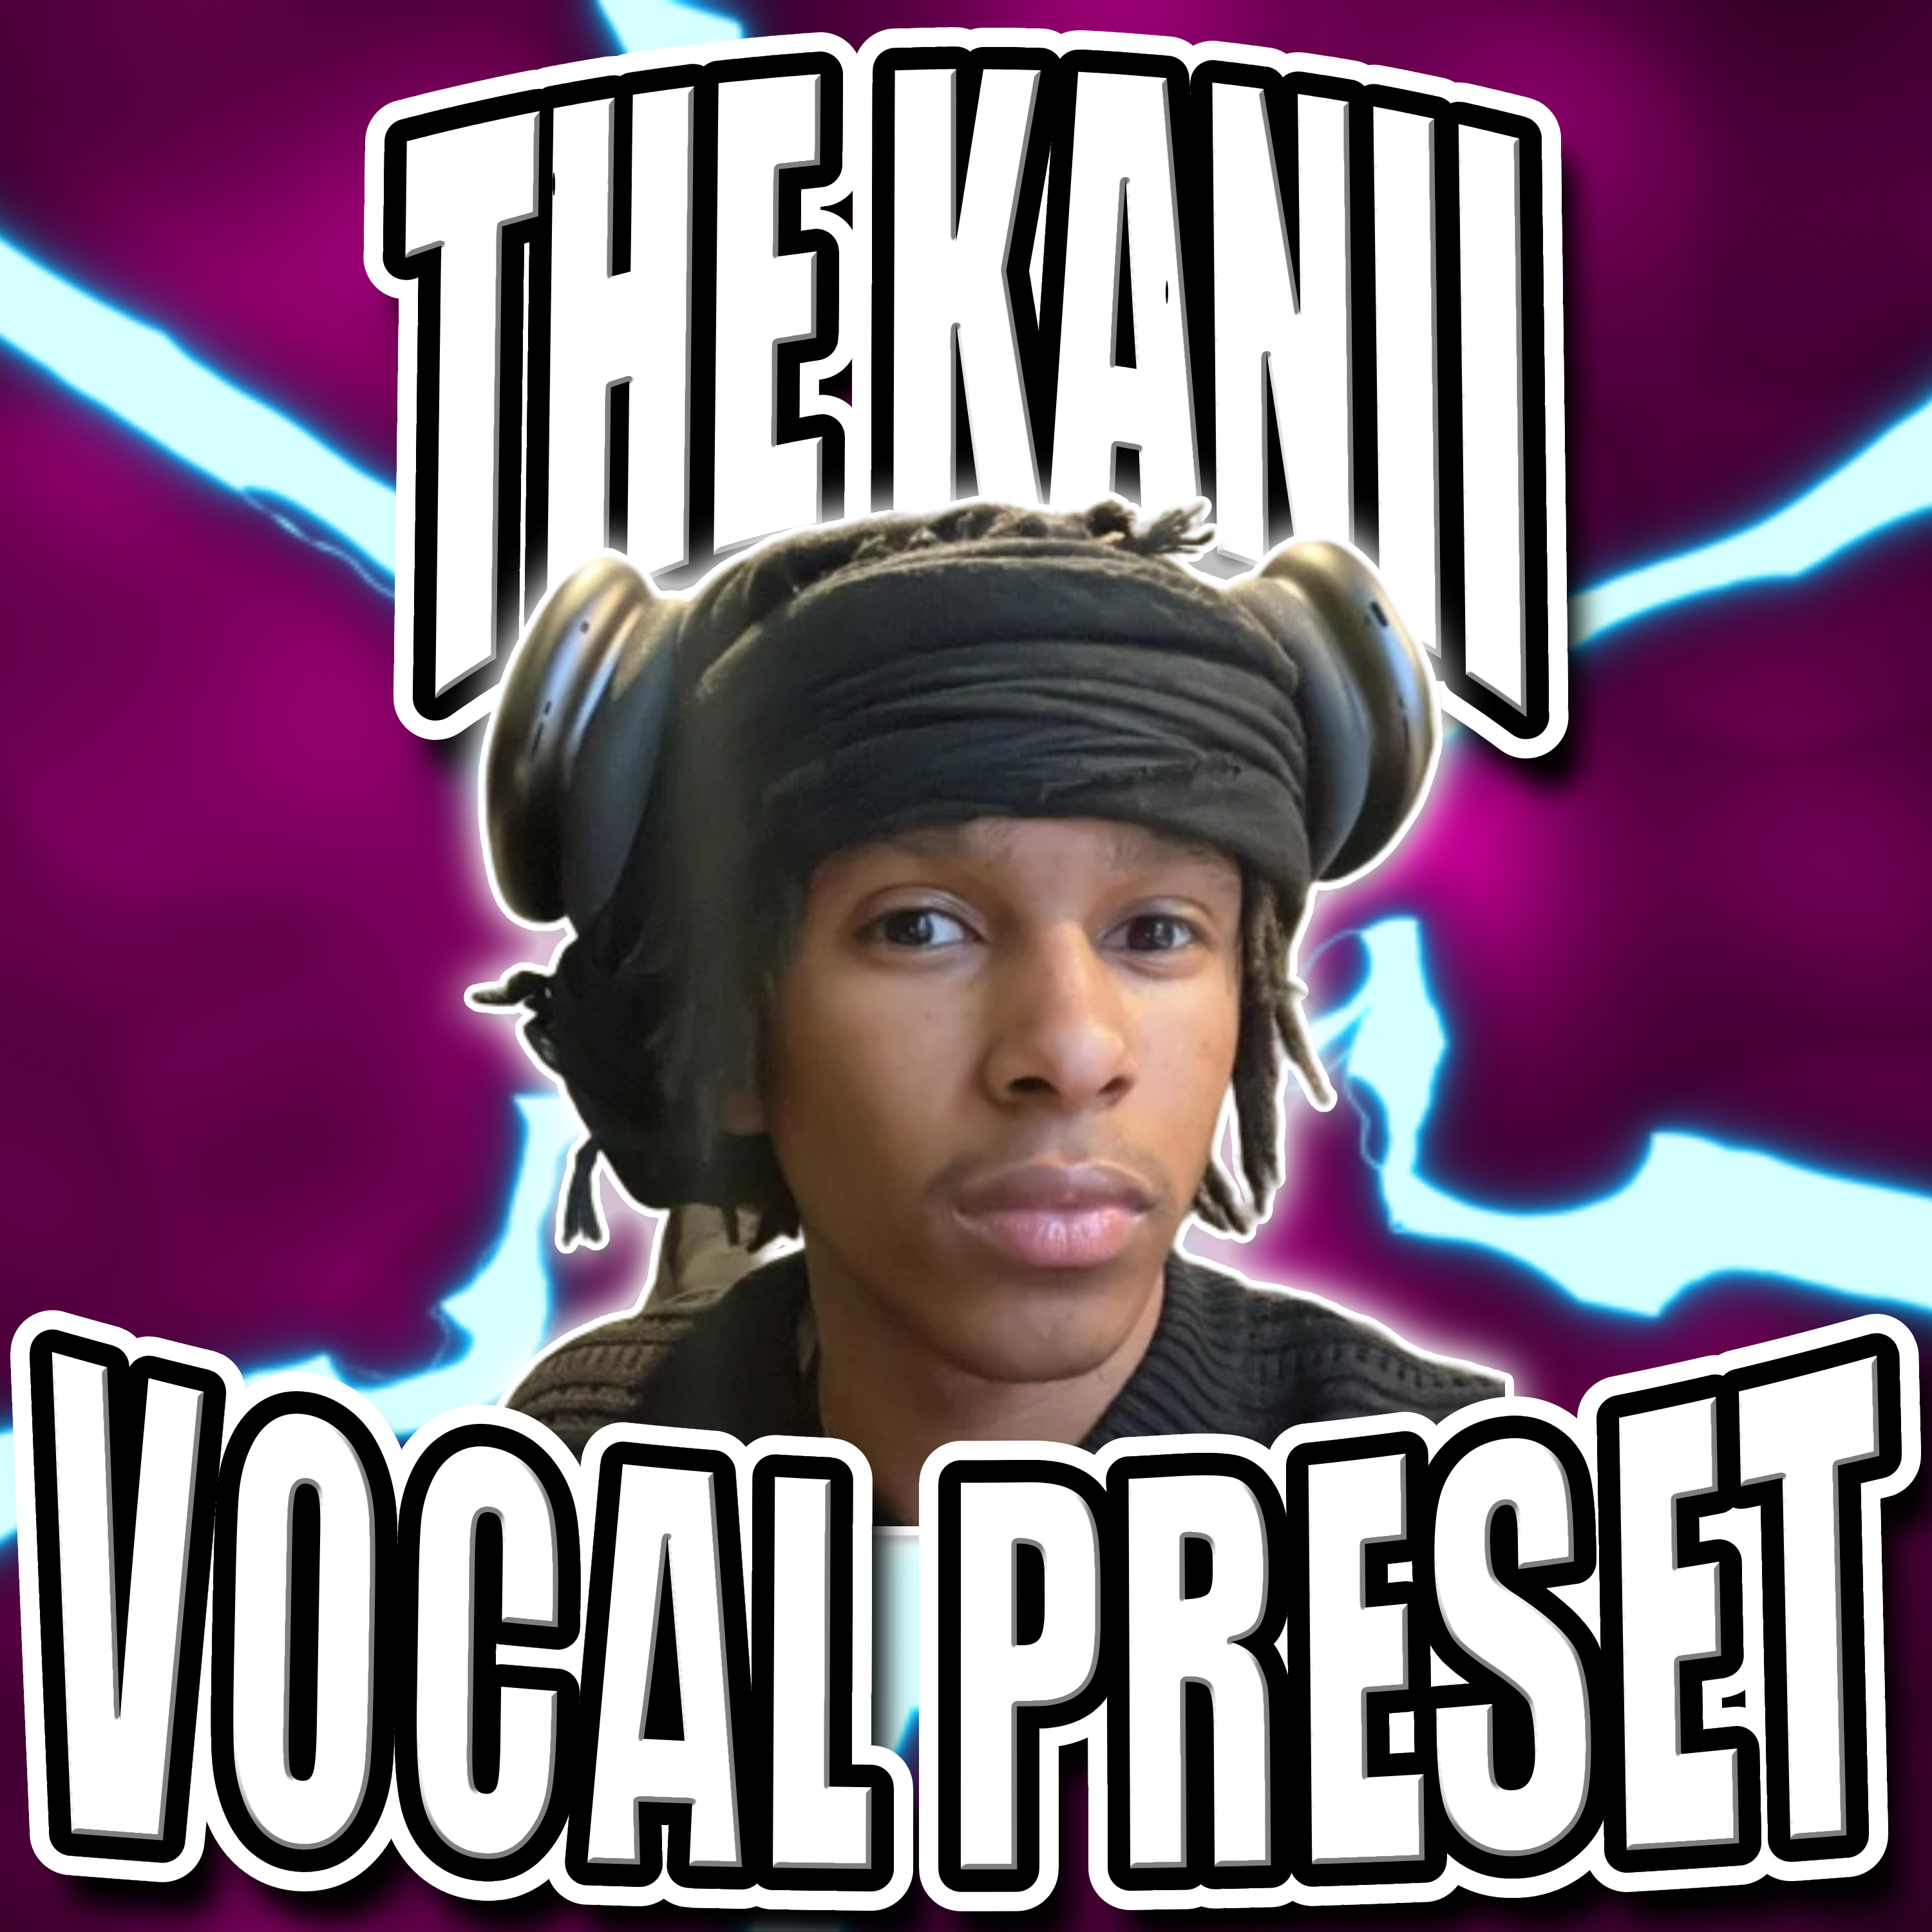 Kanii Vocal Preset